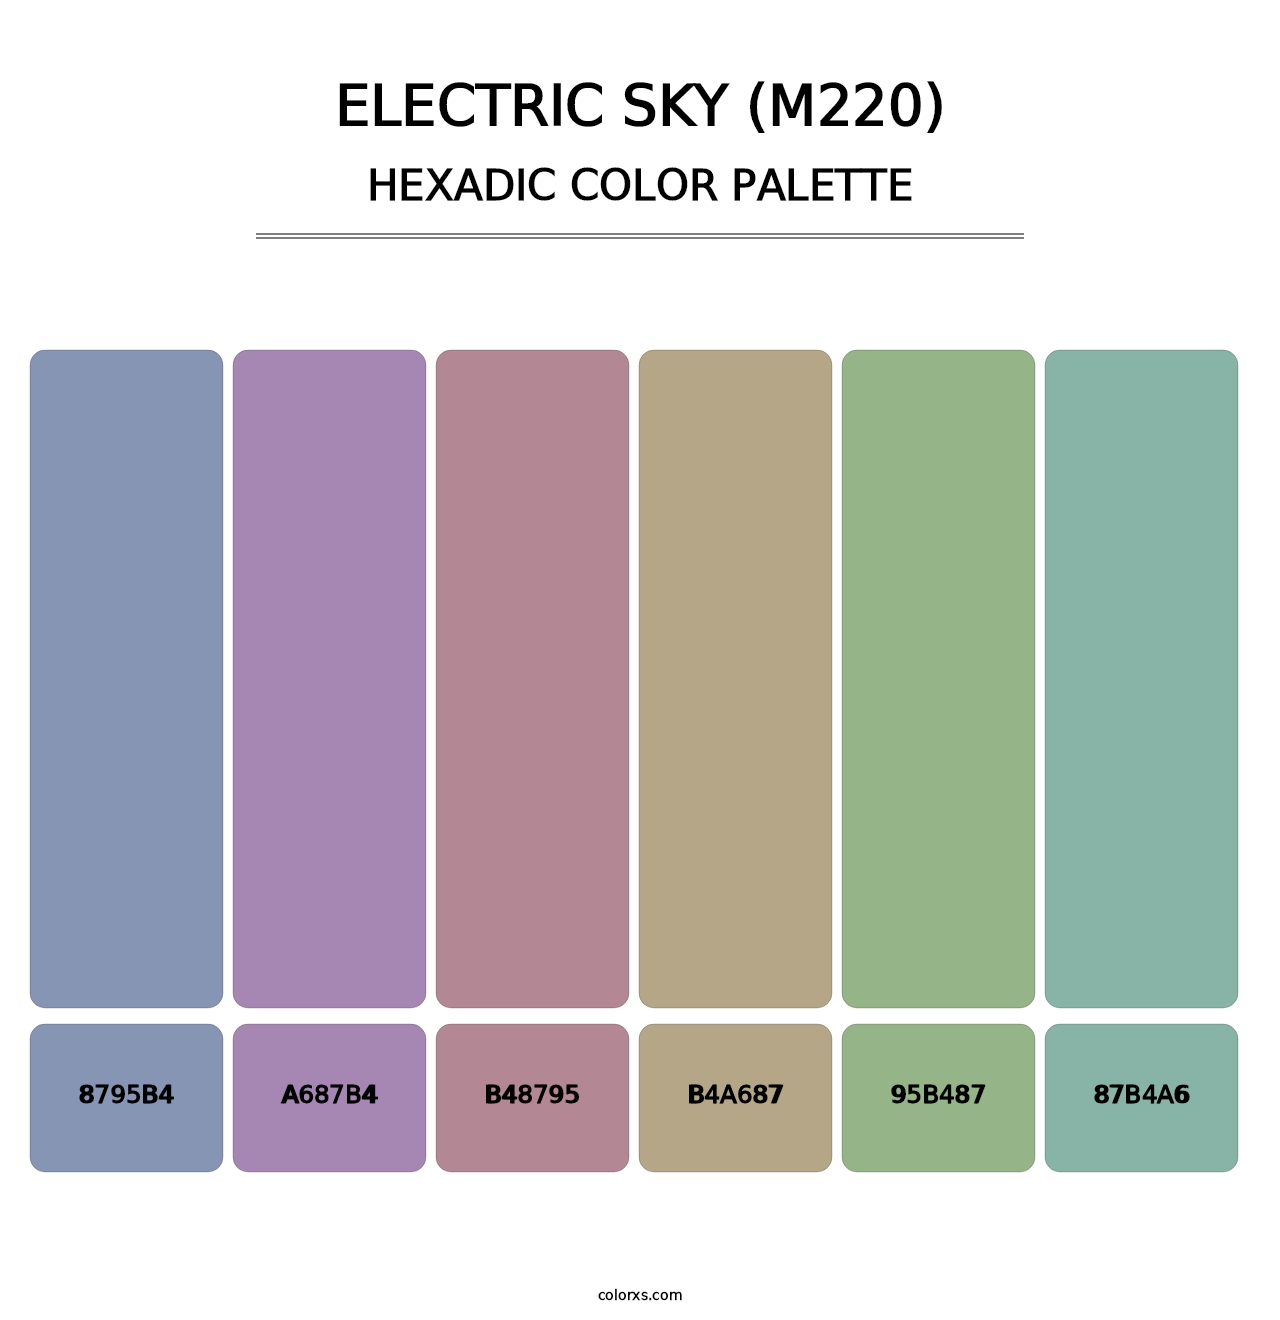 Electric Sky (M220) - Hexadic Color Palette